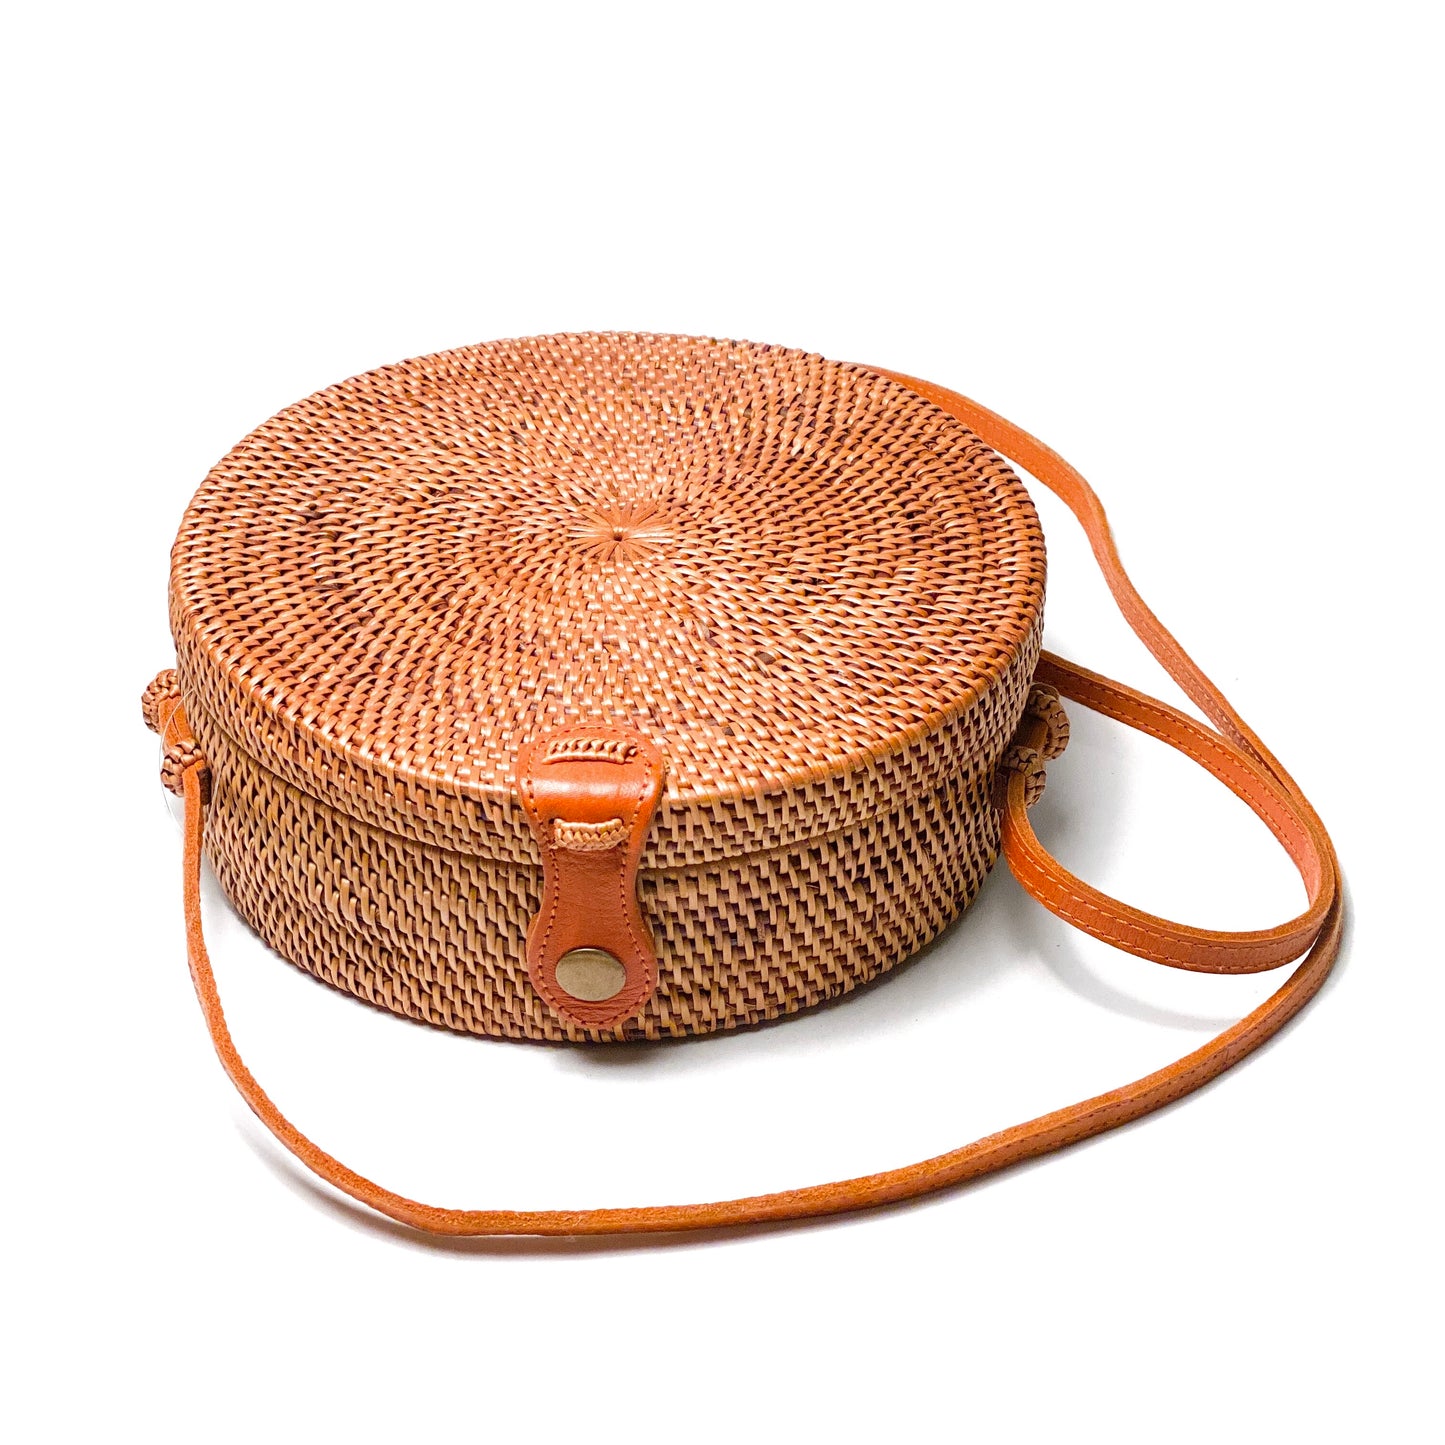 Sea Grass Handmade woven Rattan Bag